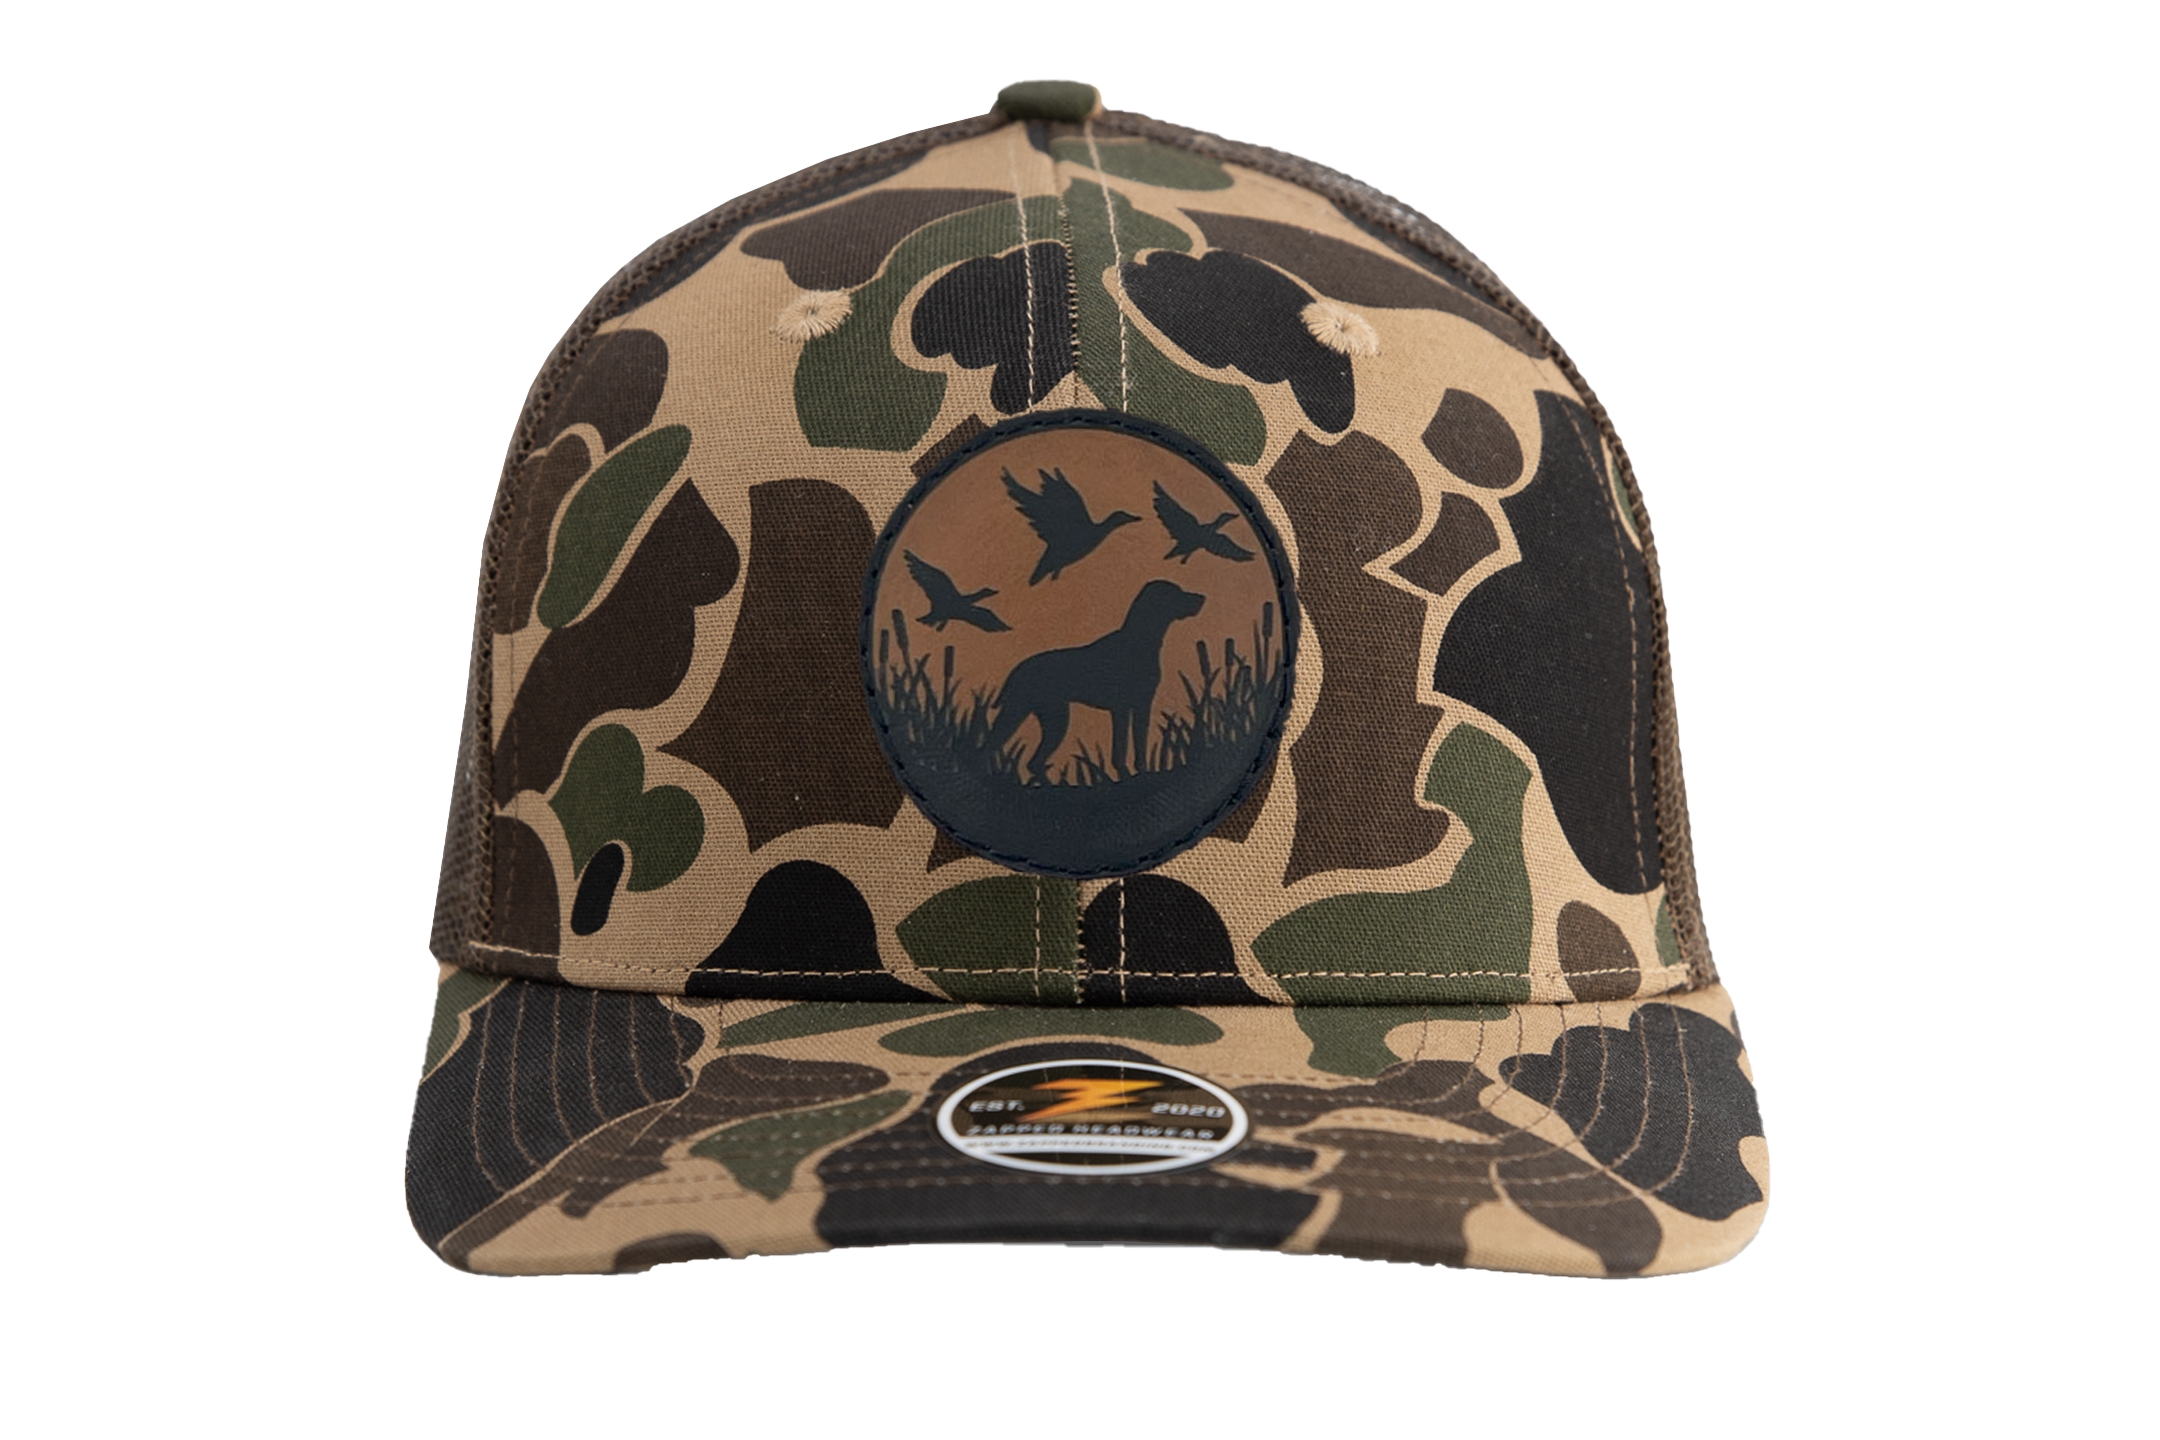 Zapped Headwear Warrior Premium Hunting Hat - Ducks and Dog